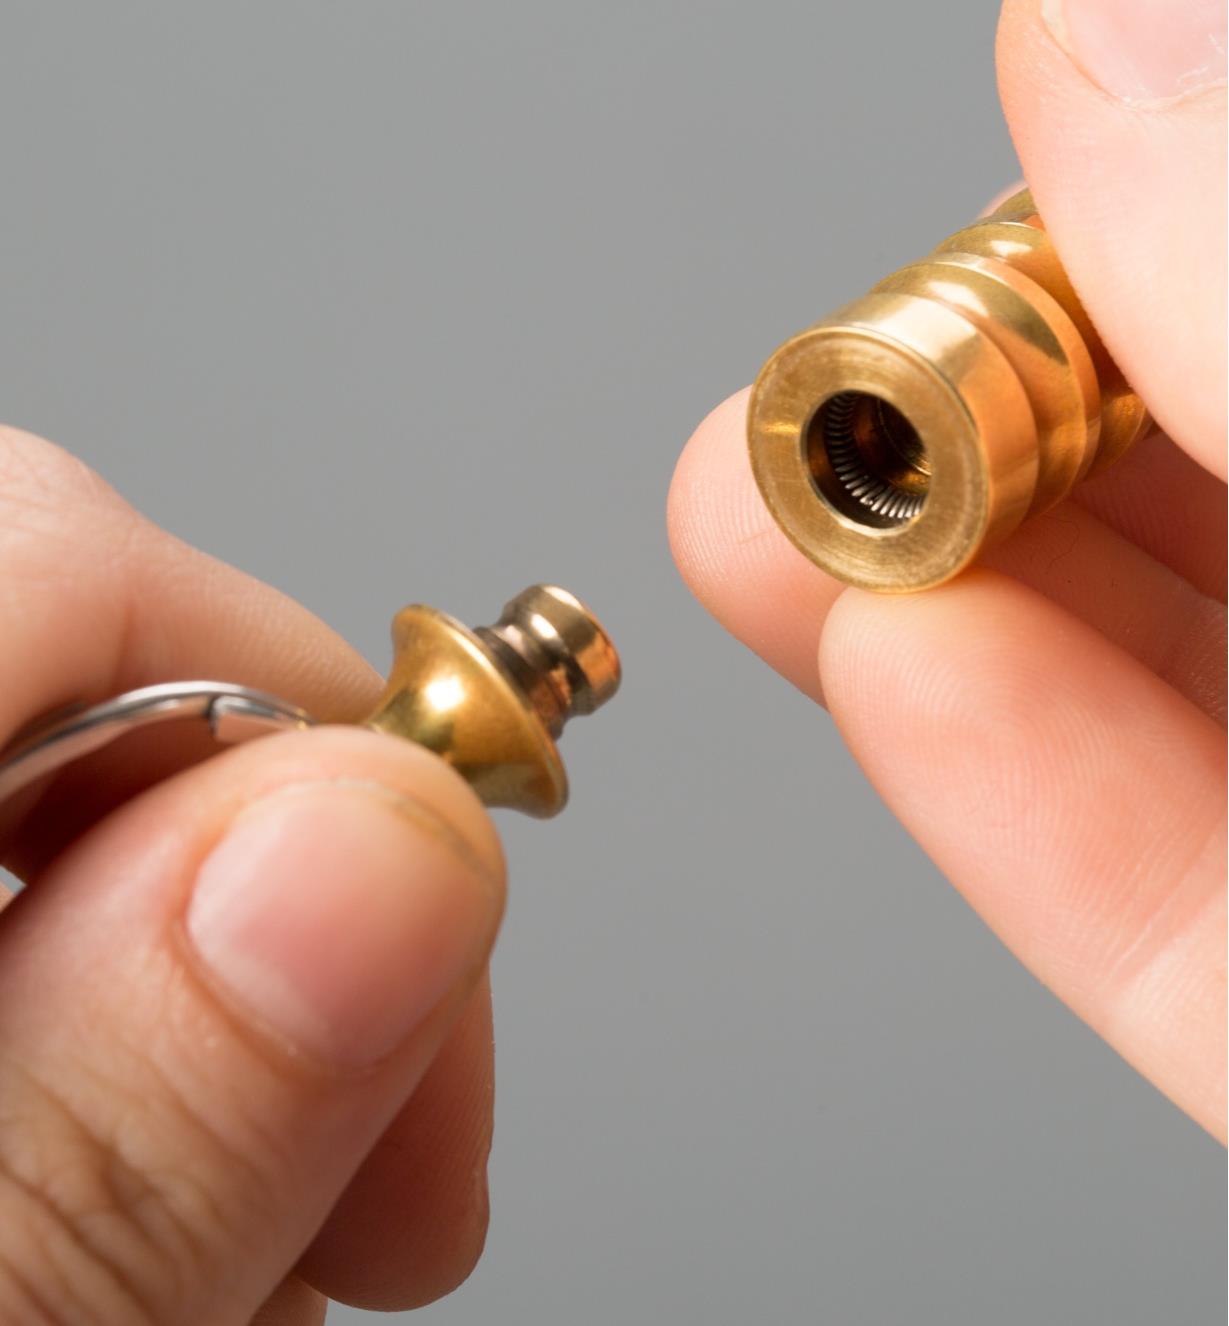 Detaching the brass flashlight from the key ring